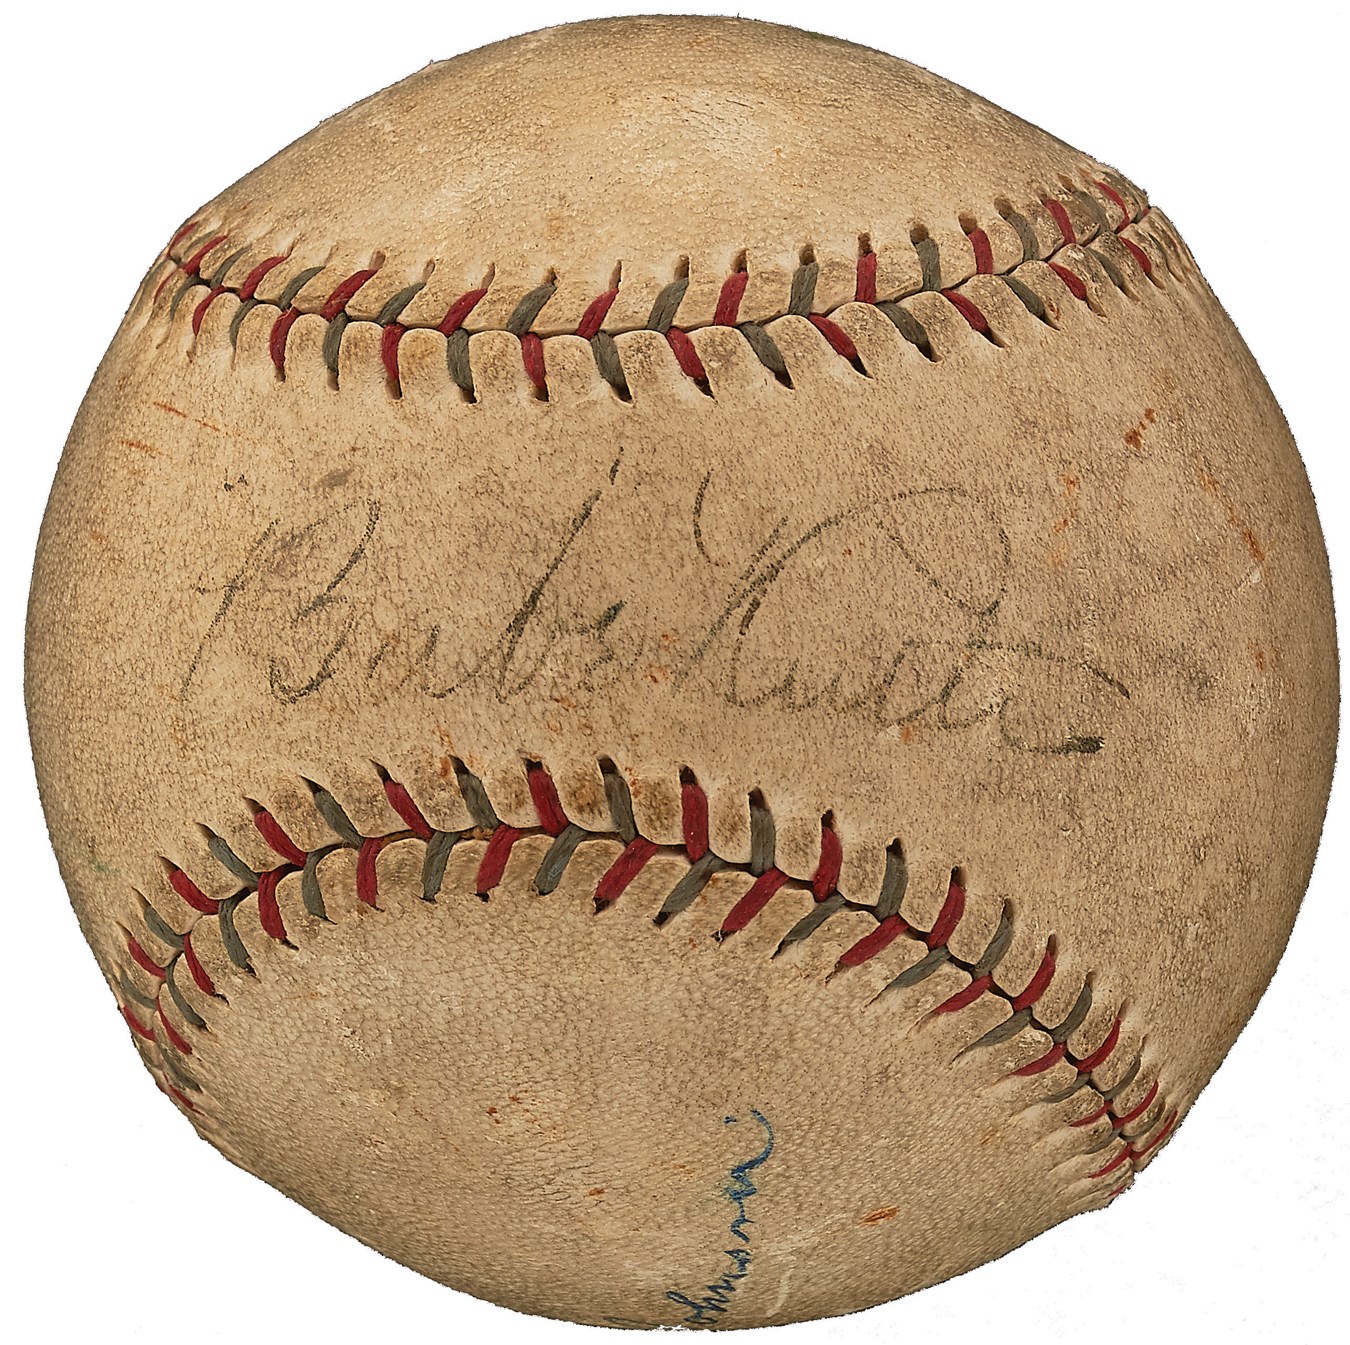 - 1926-27 Babe Ruth Single-Signed Official American League Ban Johnson Baseball (PSA)